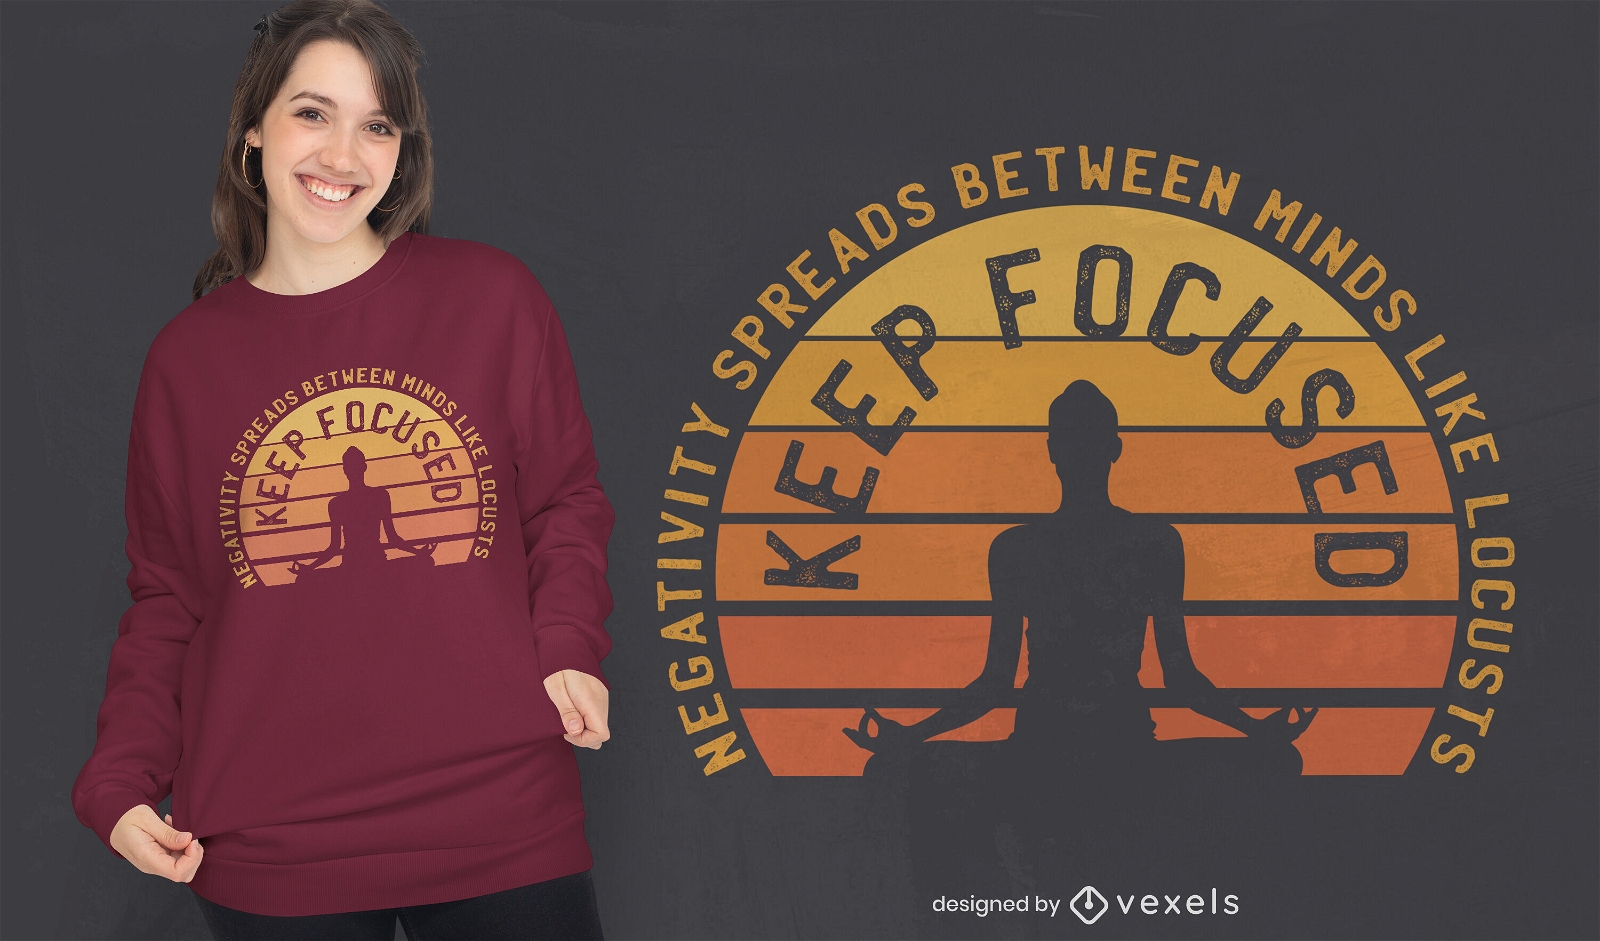 Keep focused meditation t-shirt design